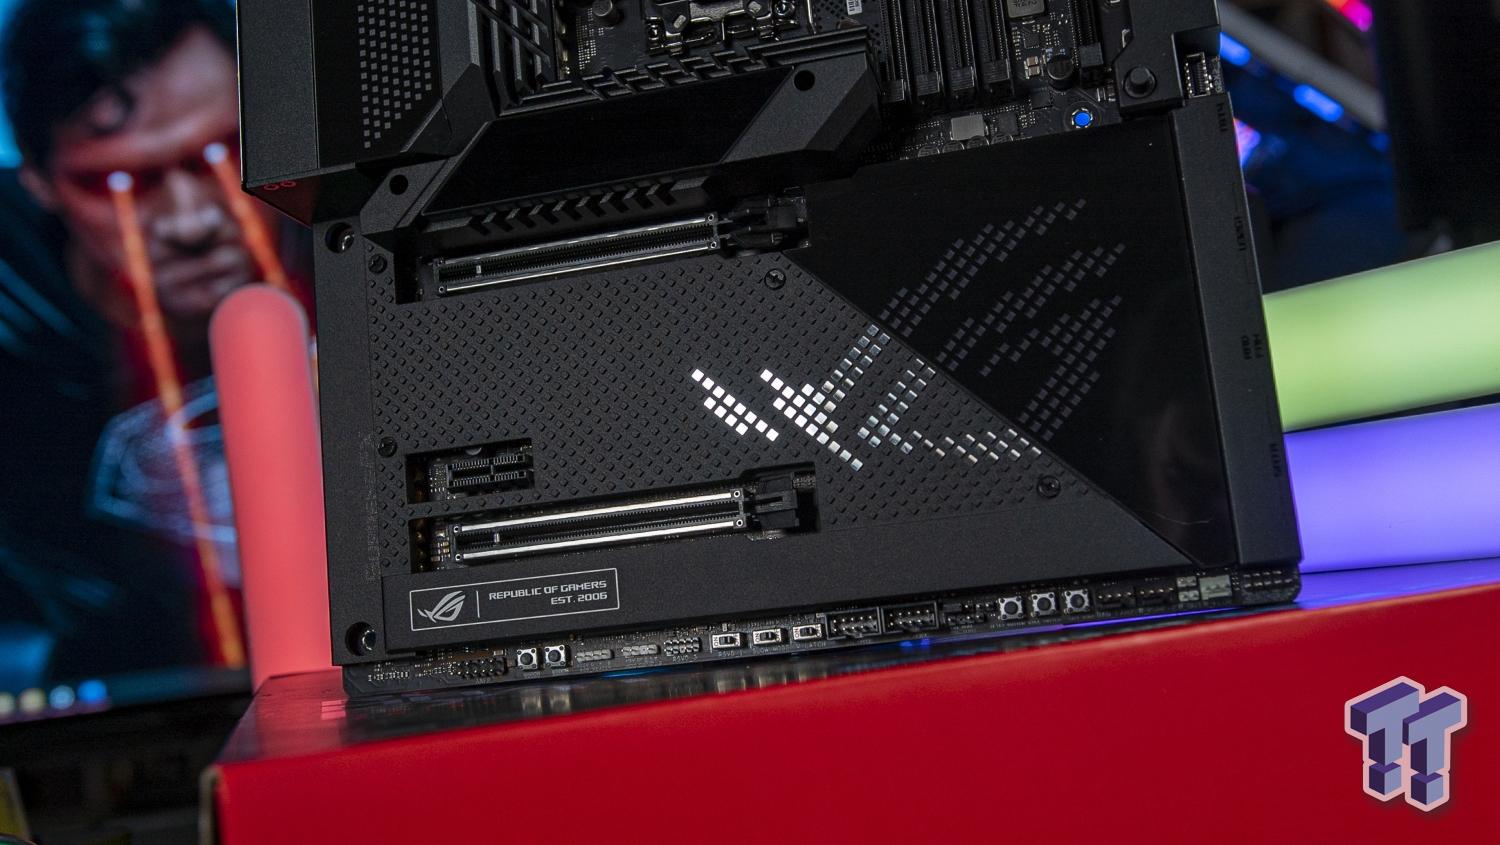 PNY GeForce RTX 4070 Ti Confirms RTX 4080 12 GB Specs Under The Hood